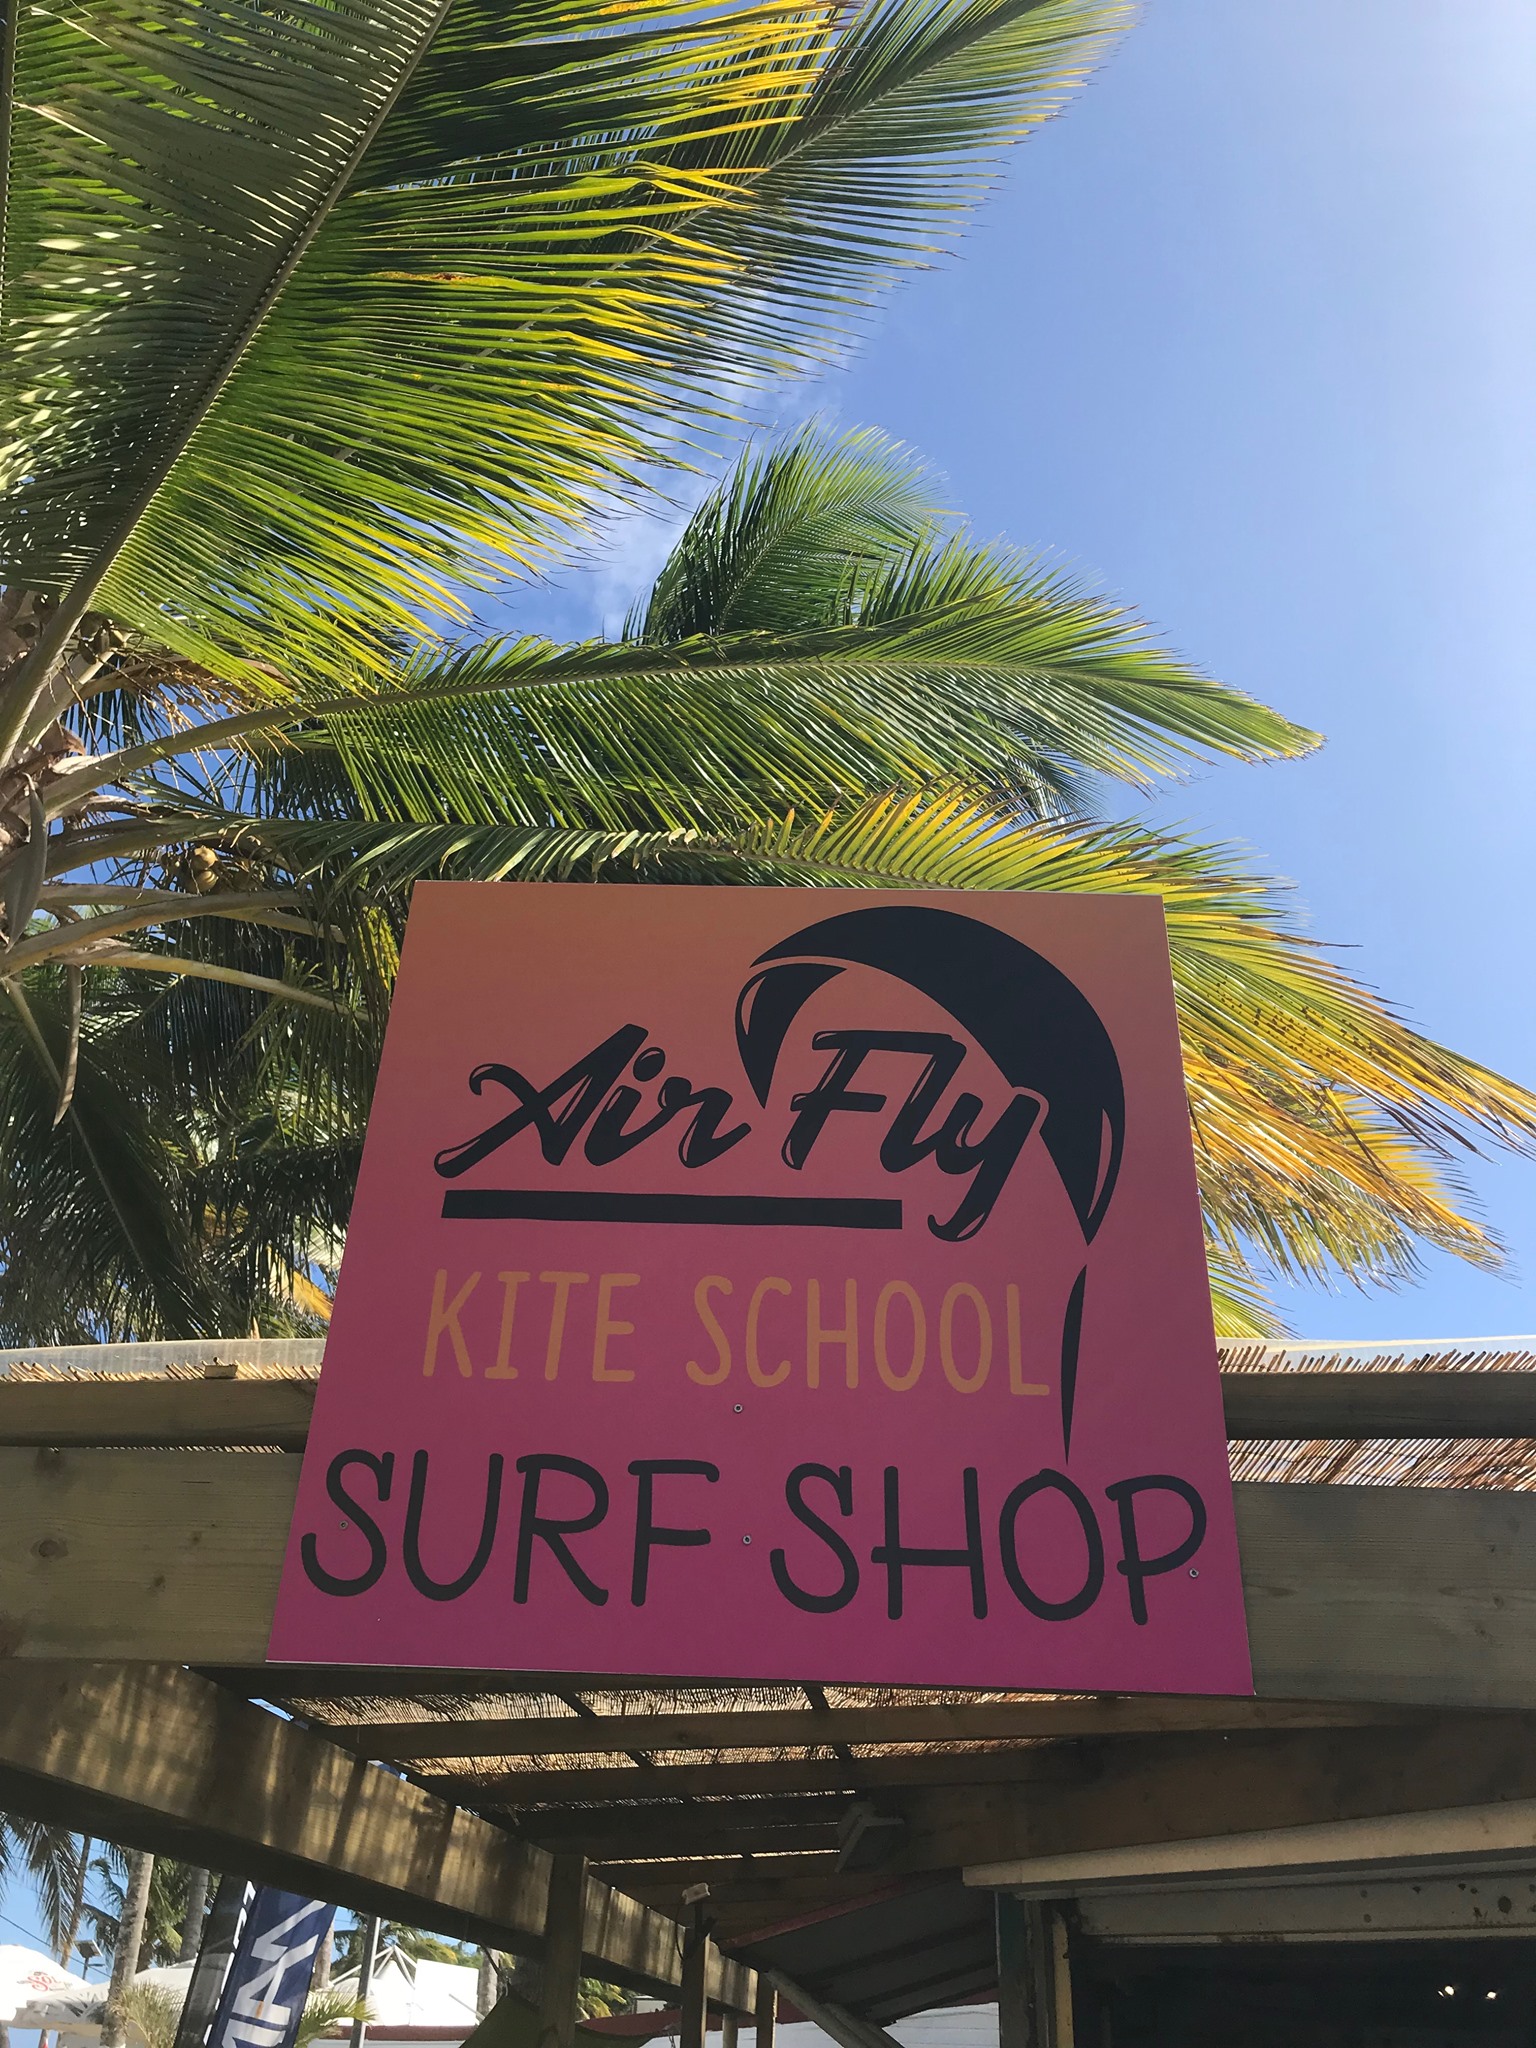 AirFly - Kite school - Surf shop